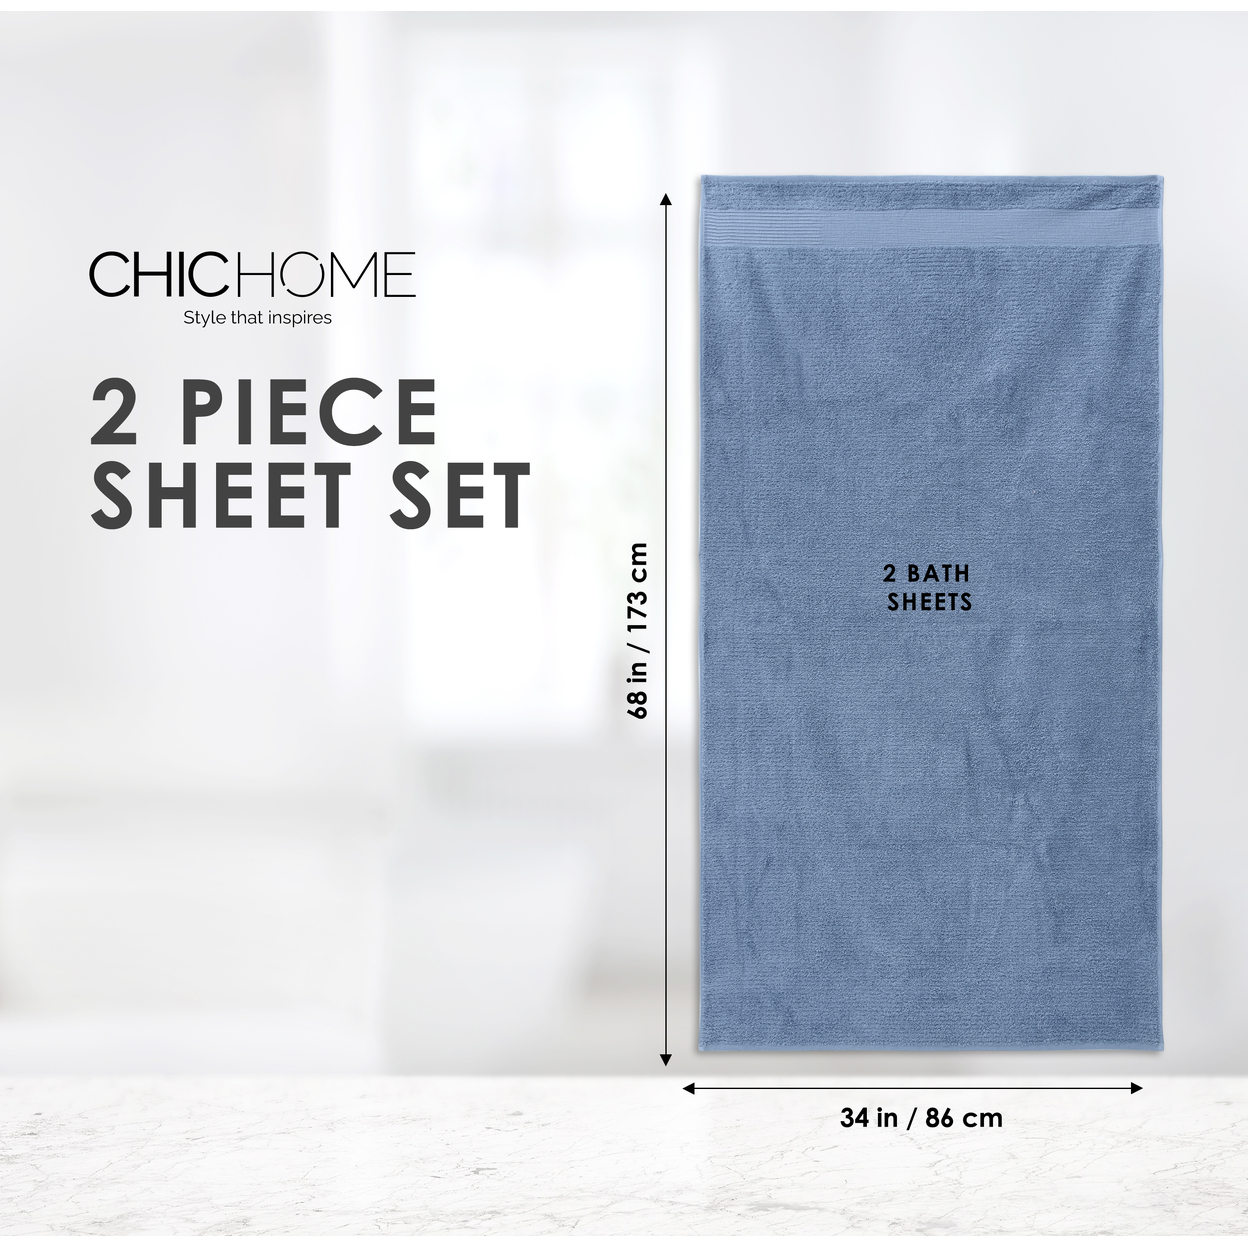 Chic Home Luxurious 2-Piece 100% Pure Turkish Cotton Bath Sheet Towels, 34x68, Jacquard Weave Design, OEKO-TEX Certified Set - White